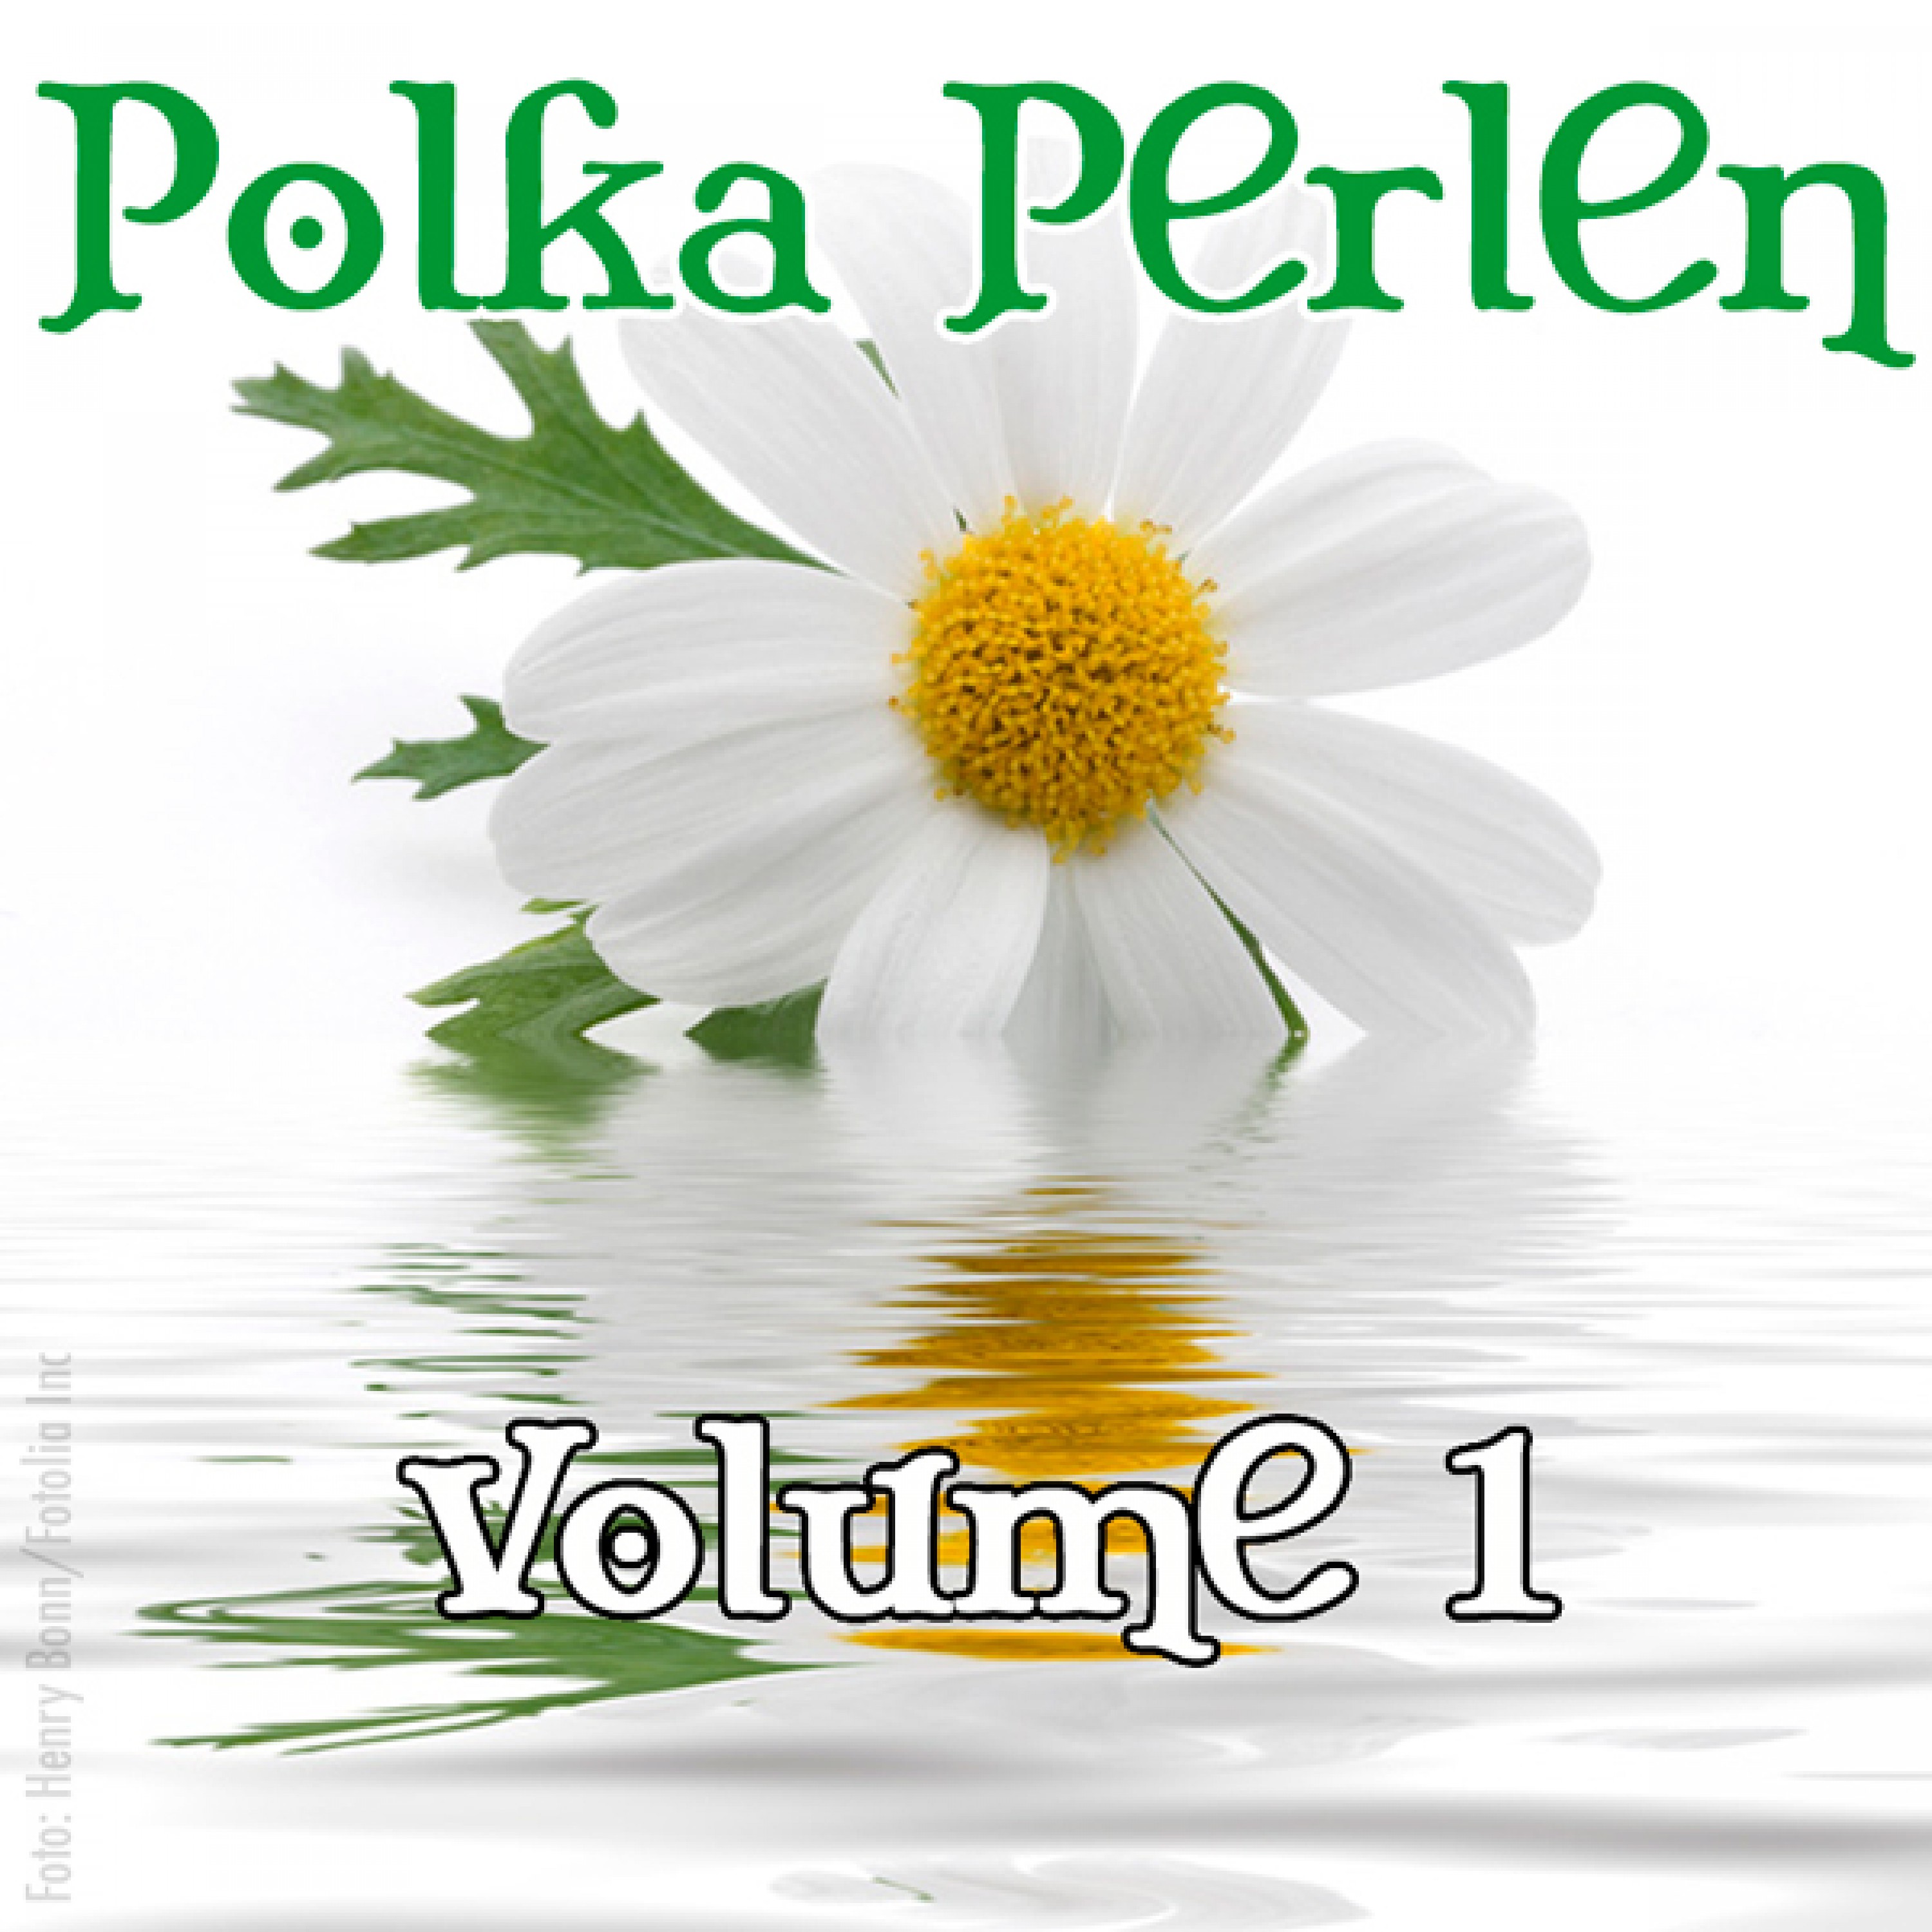 Polka Perlen Vol. 1